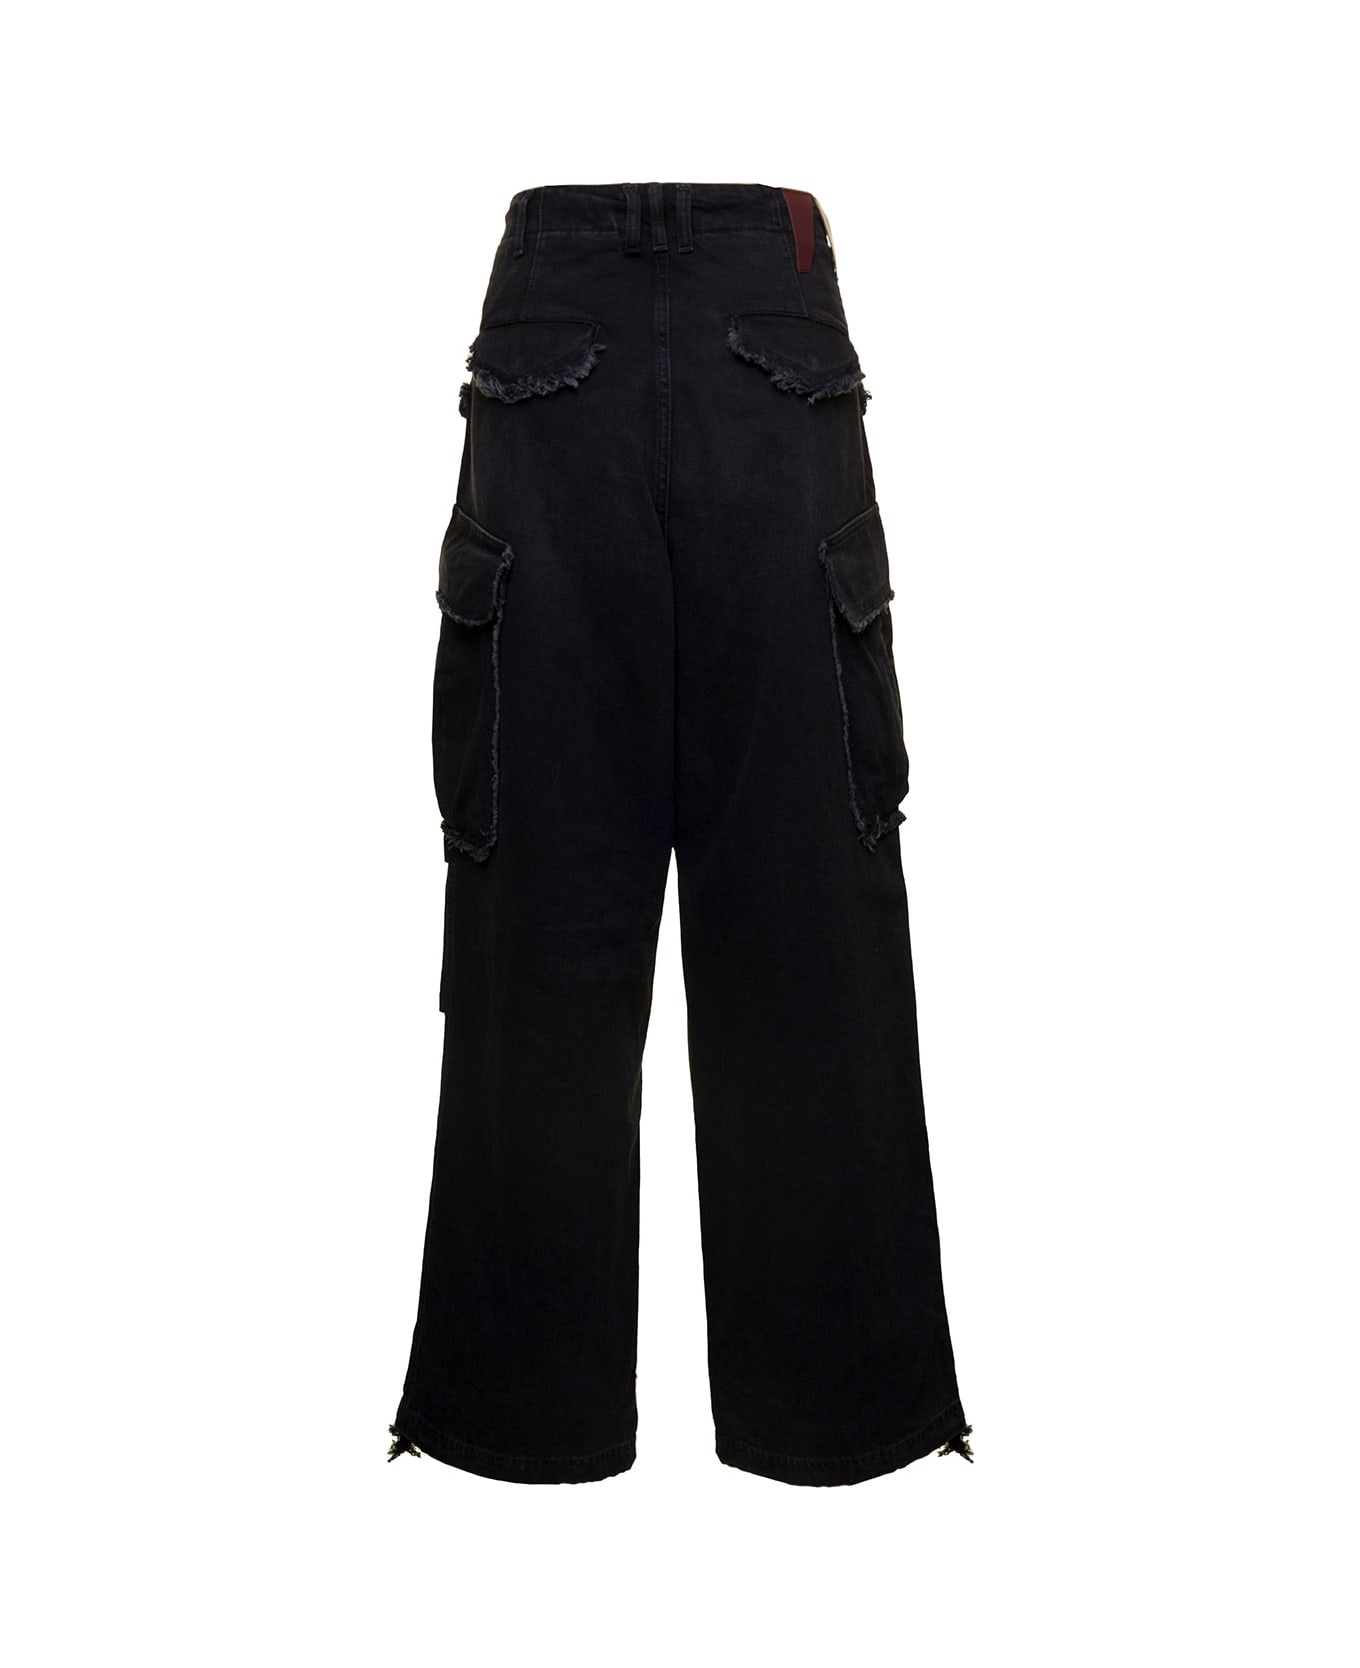 DARKPARK 'vivi' Black Oversized Cargo Jeans With Patch Pockets In Cotton Denim Woman - Black